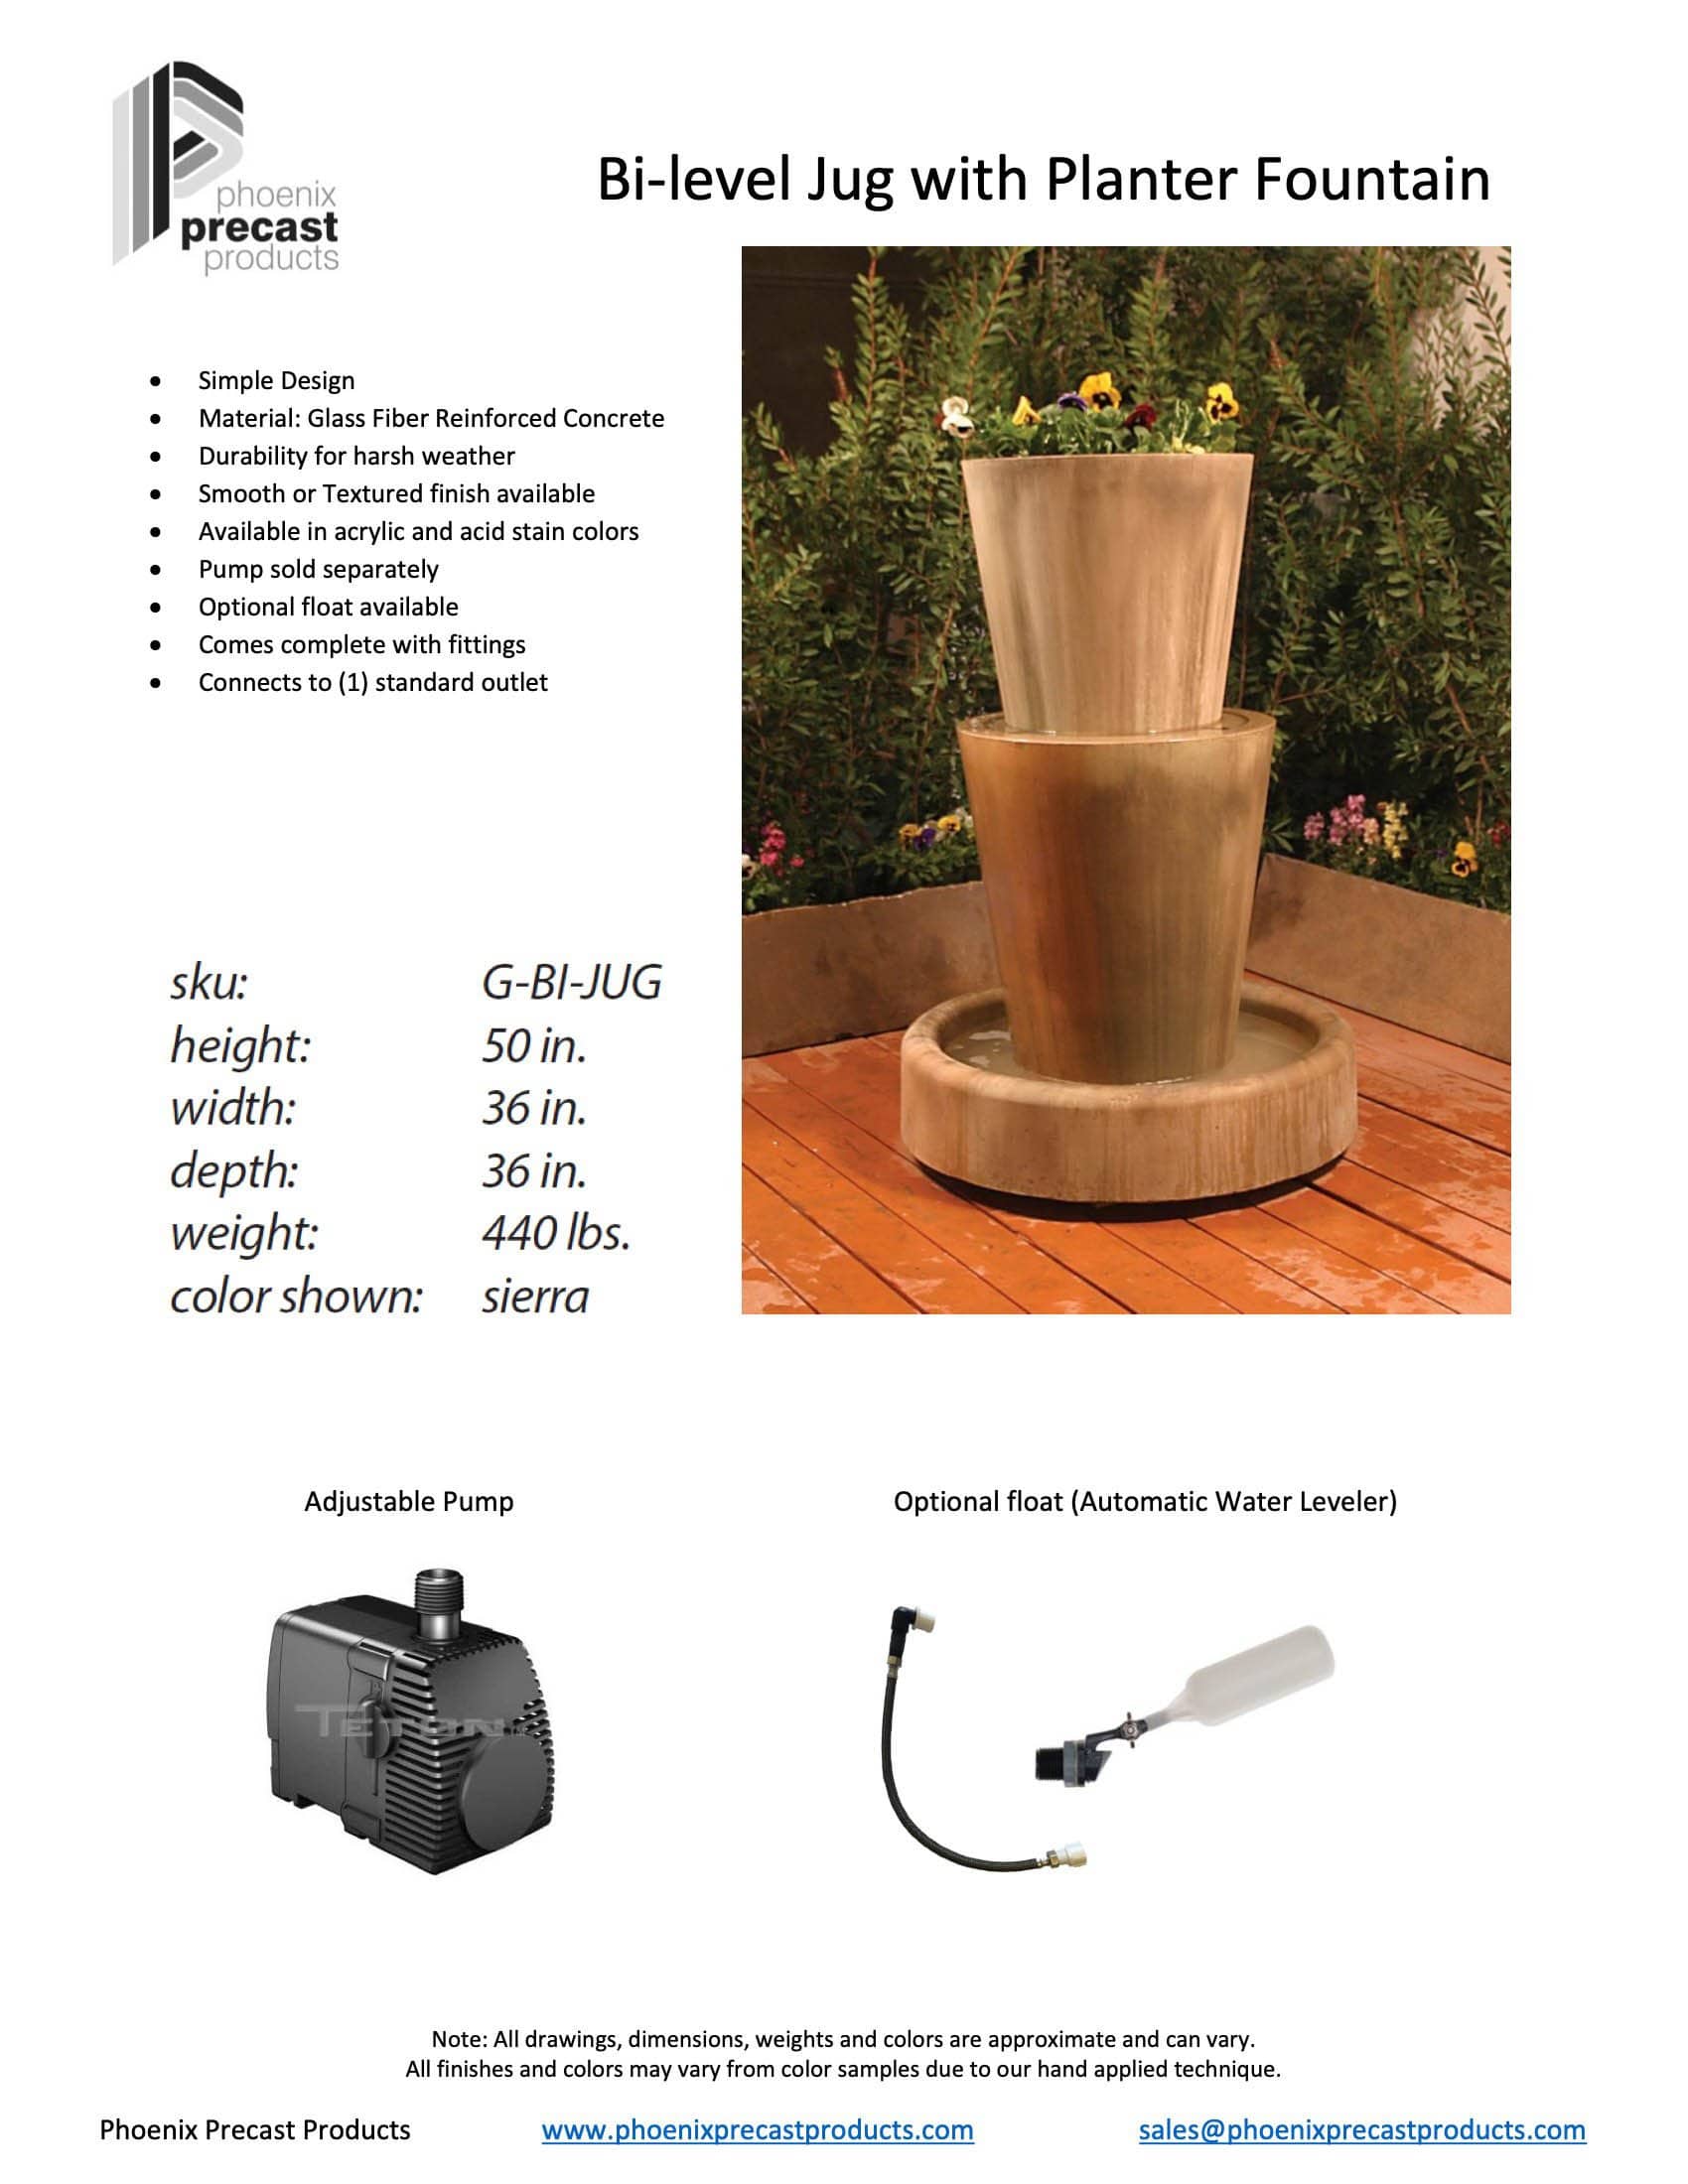 fountains-usa-phoenix-precast-bi-level-jug-with-plantar-36-wide-concrete-outdoor-fountain-g-bi-jug-